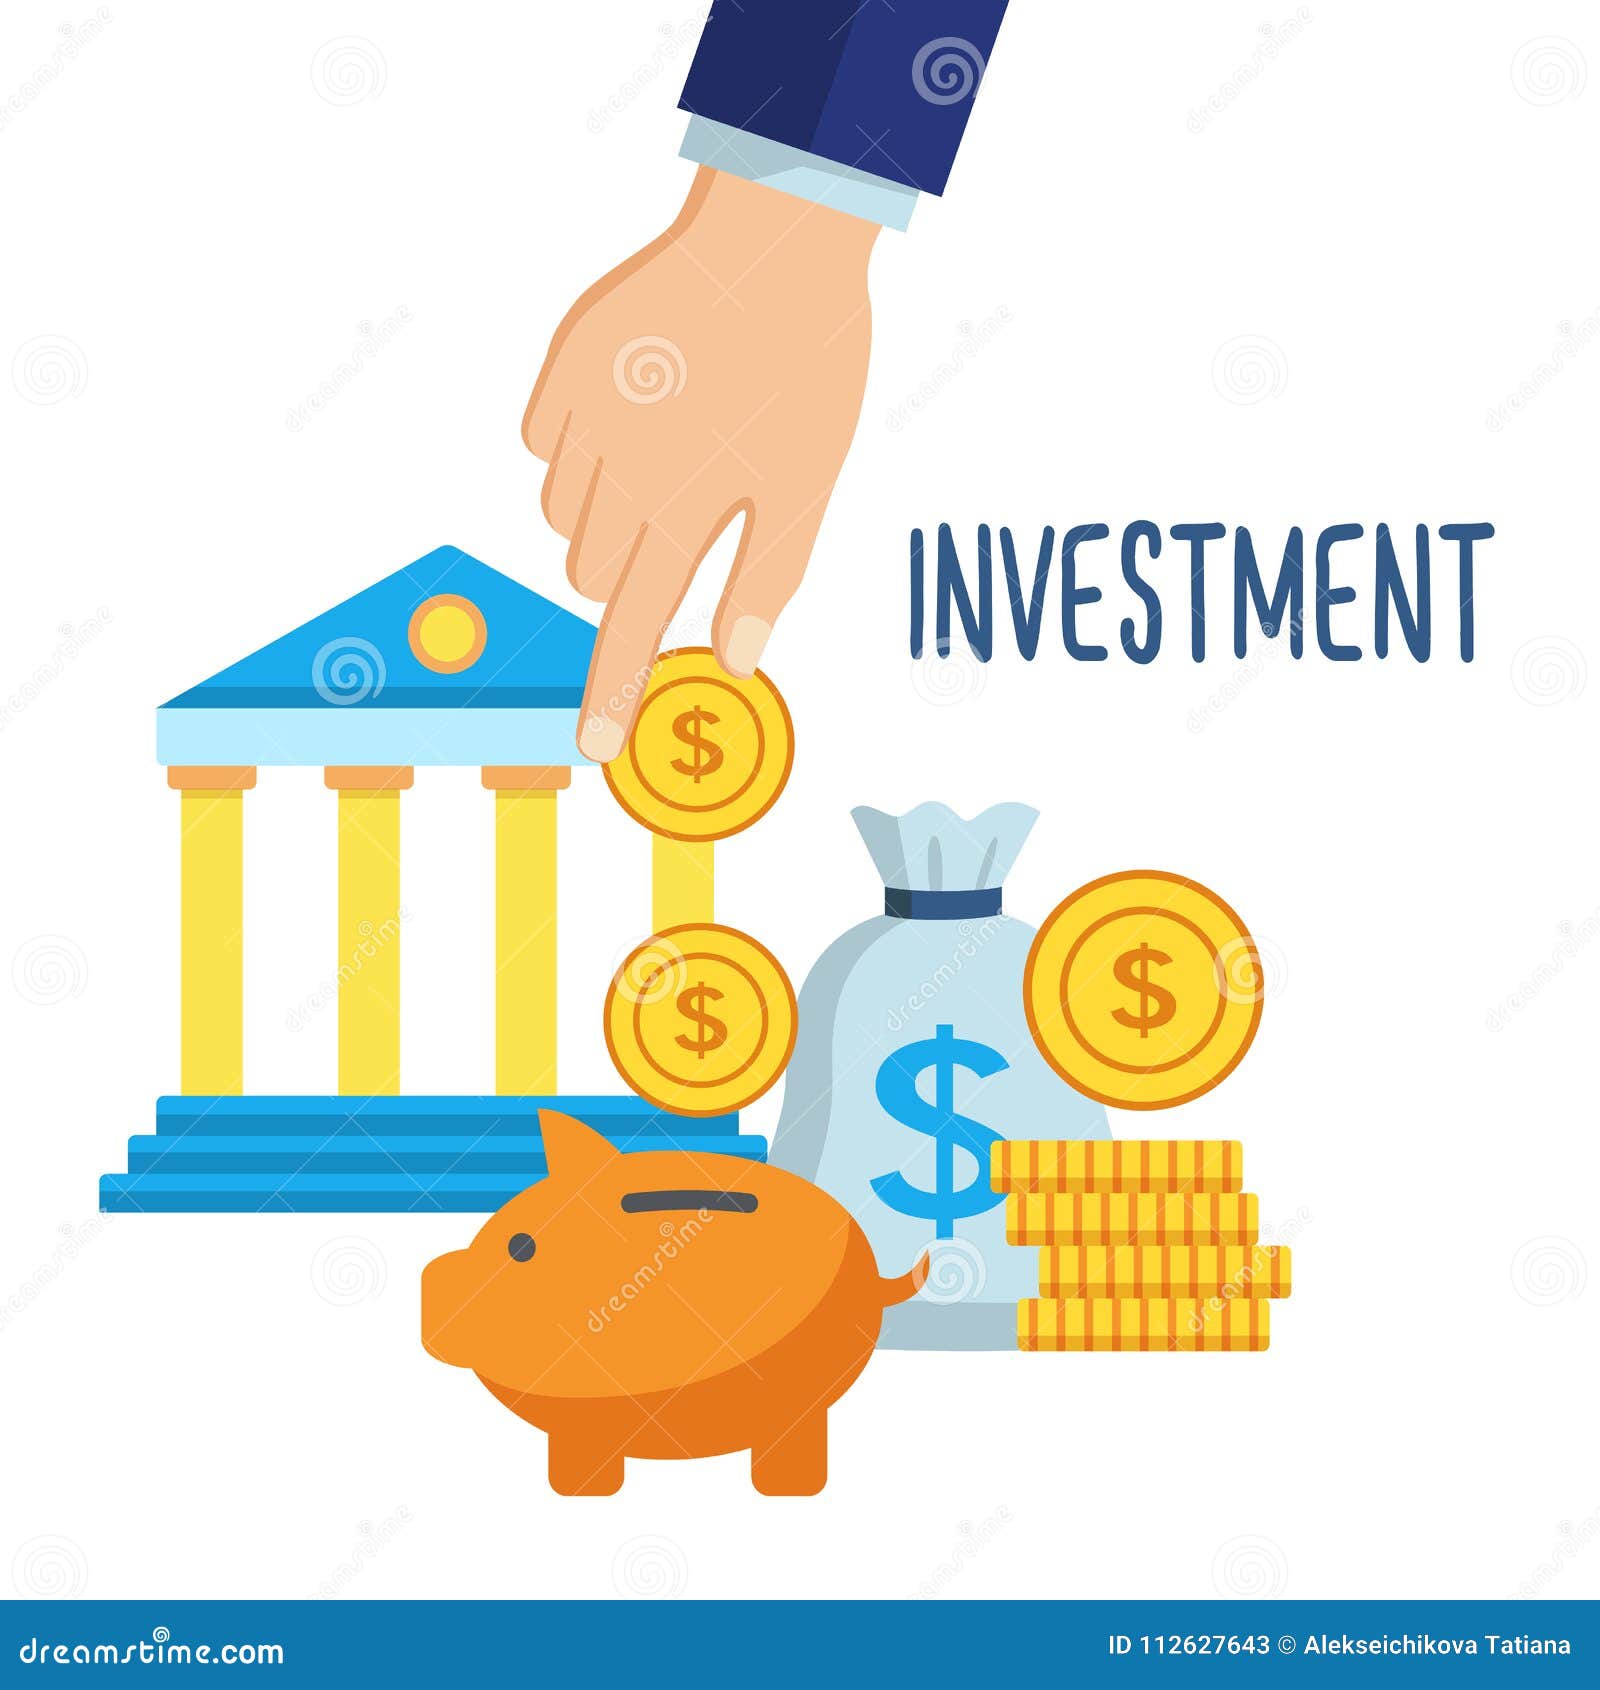 Investment money saving stock vector. Illustration of cash